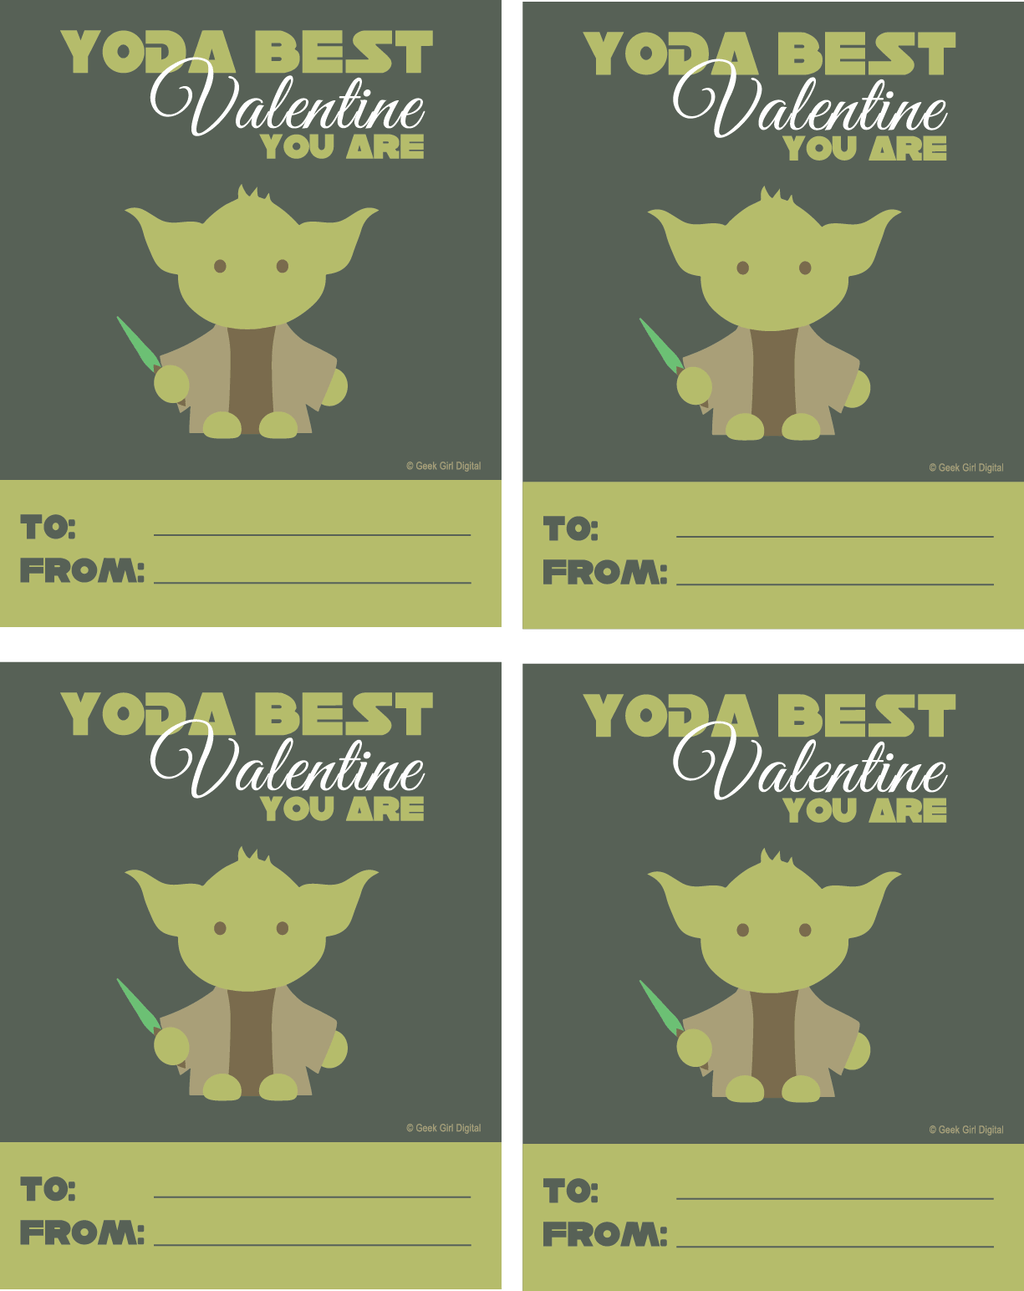 yoda best valentine